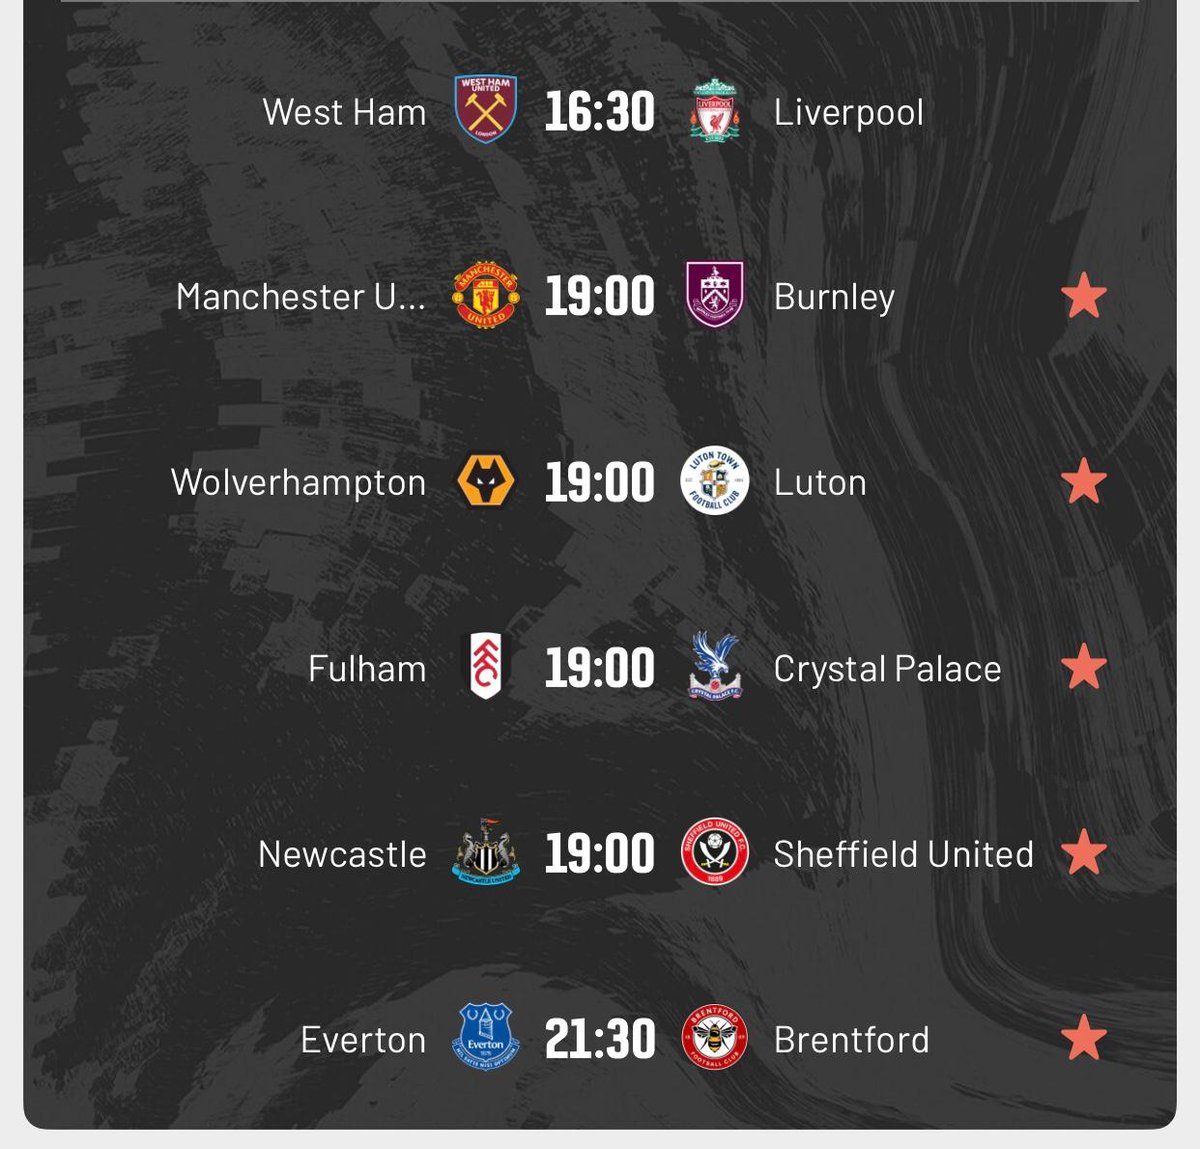 Enjoy Live #EnglandChampionship #EPL #LaLiga big match's tonight through my 4k I🅿️TV ♦𝟮𝟰 𝗵𝗼𝘂𝗿𝘀 𝗳𝗿𝗲𝗲 𝘁𝗿𝗮𝗶𝗹 🔗wa.me/+447599708118 #SCOvFRA #bcafc #oafc #ncfc #rufc #bbtvi #swfc #IPTV #bbcqt #IPTV #PremierLeagueDarts #MCIBHA #EPL #Liverpool #LaLiga #UCL #gntm